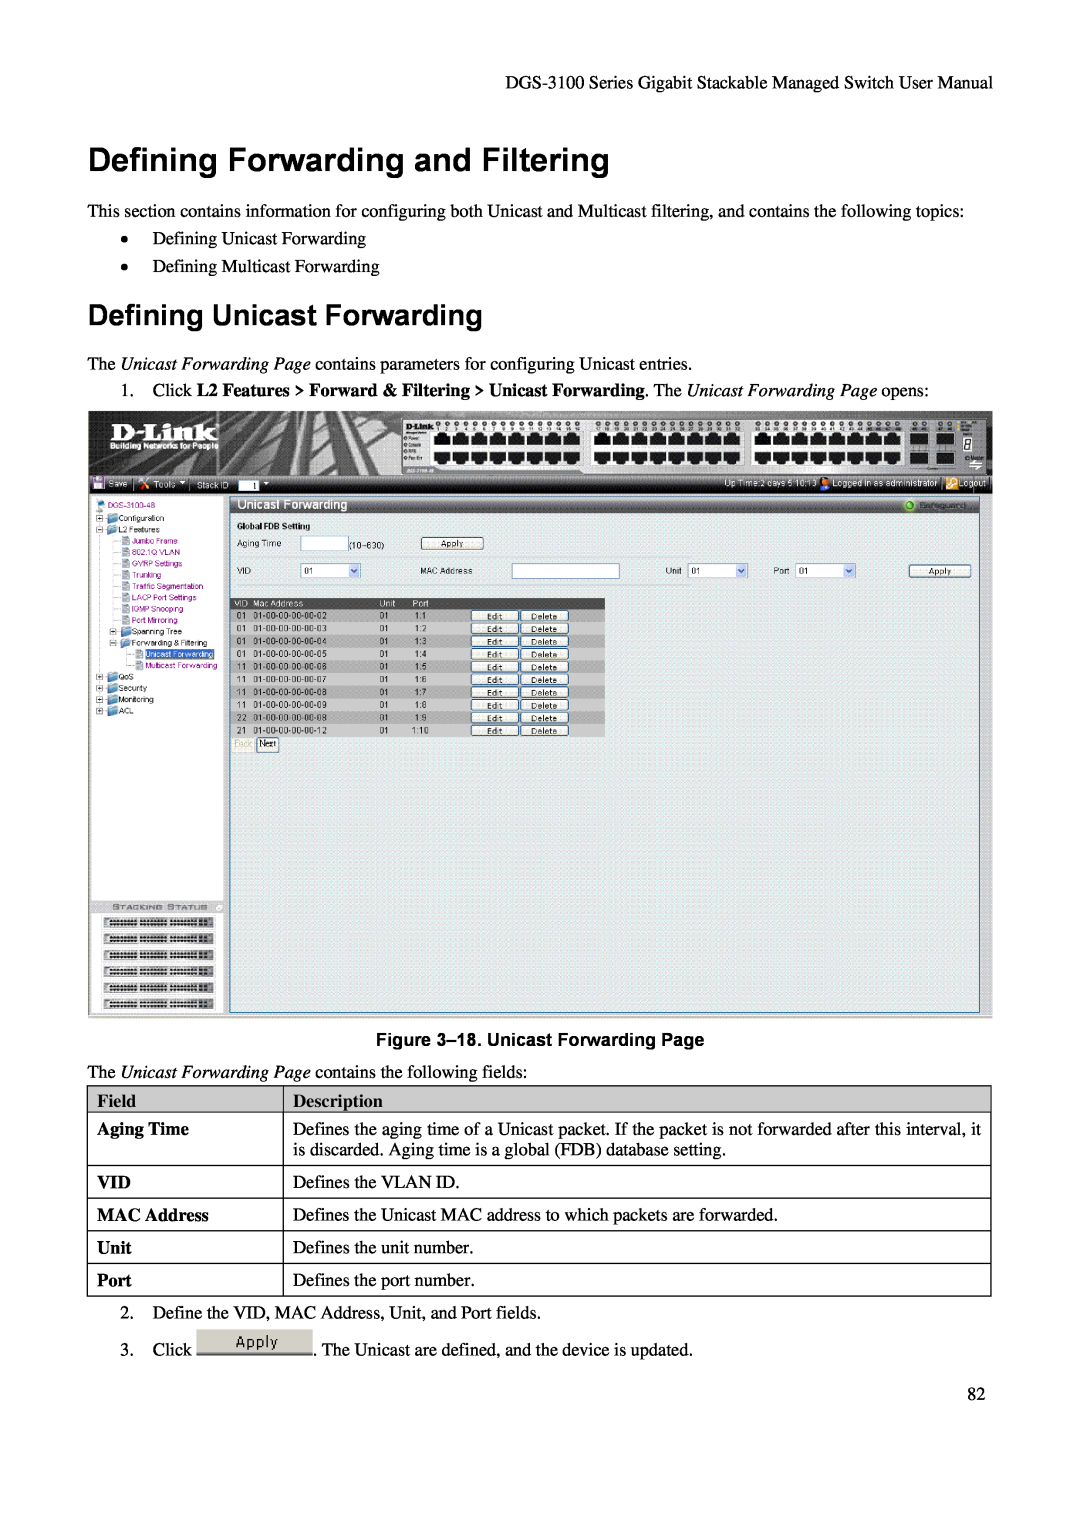 D-Link DGS-3100 Defining Forwarding and Filtering, Defining Unicast Forwarding, 18. Unicast Forwarding Page, Description 